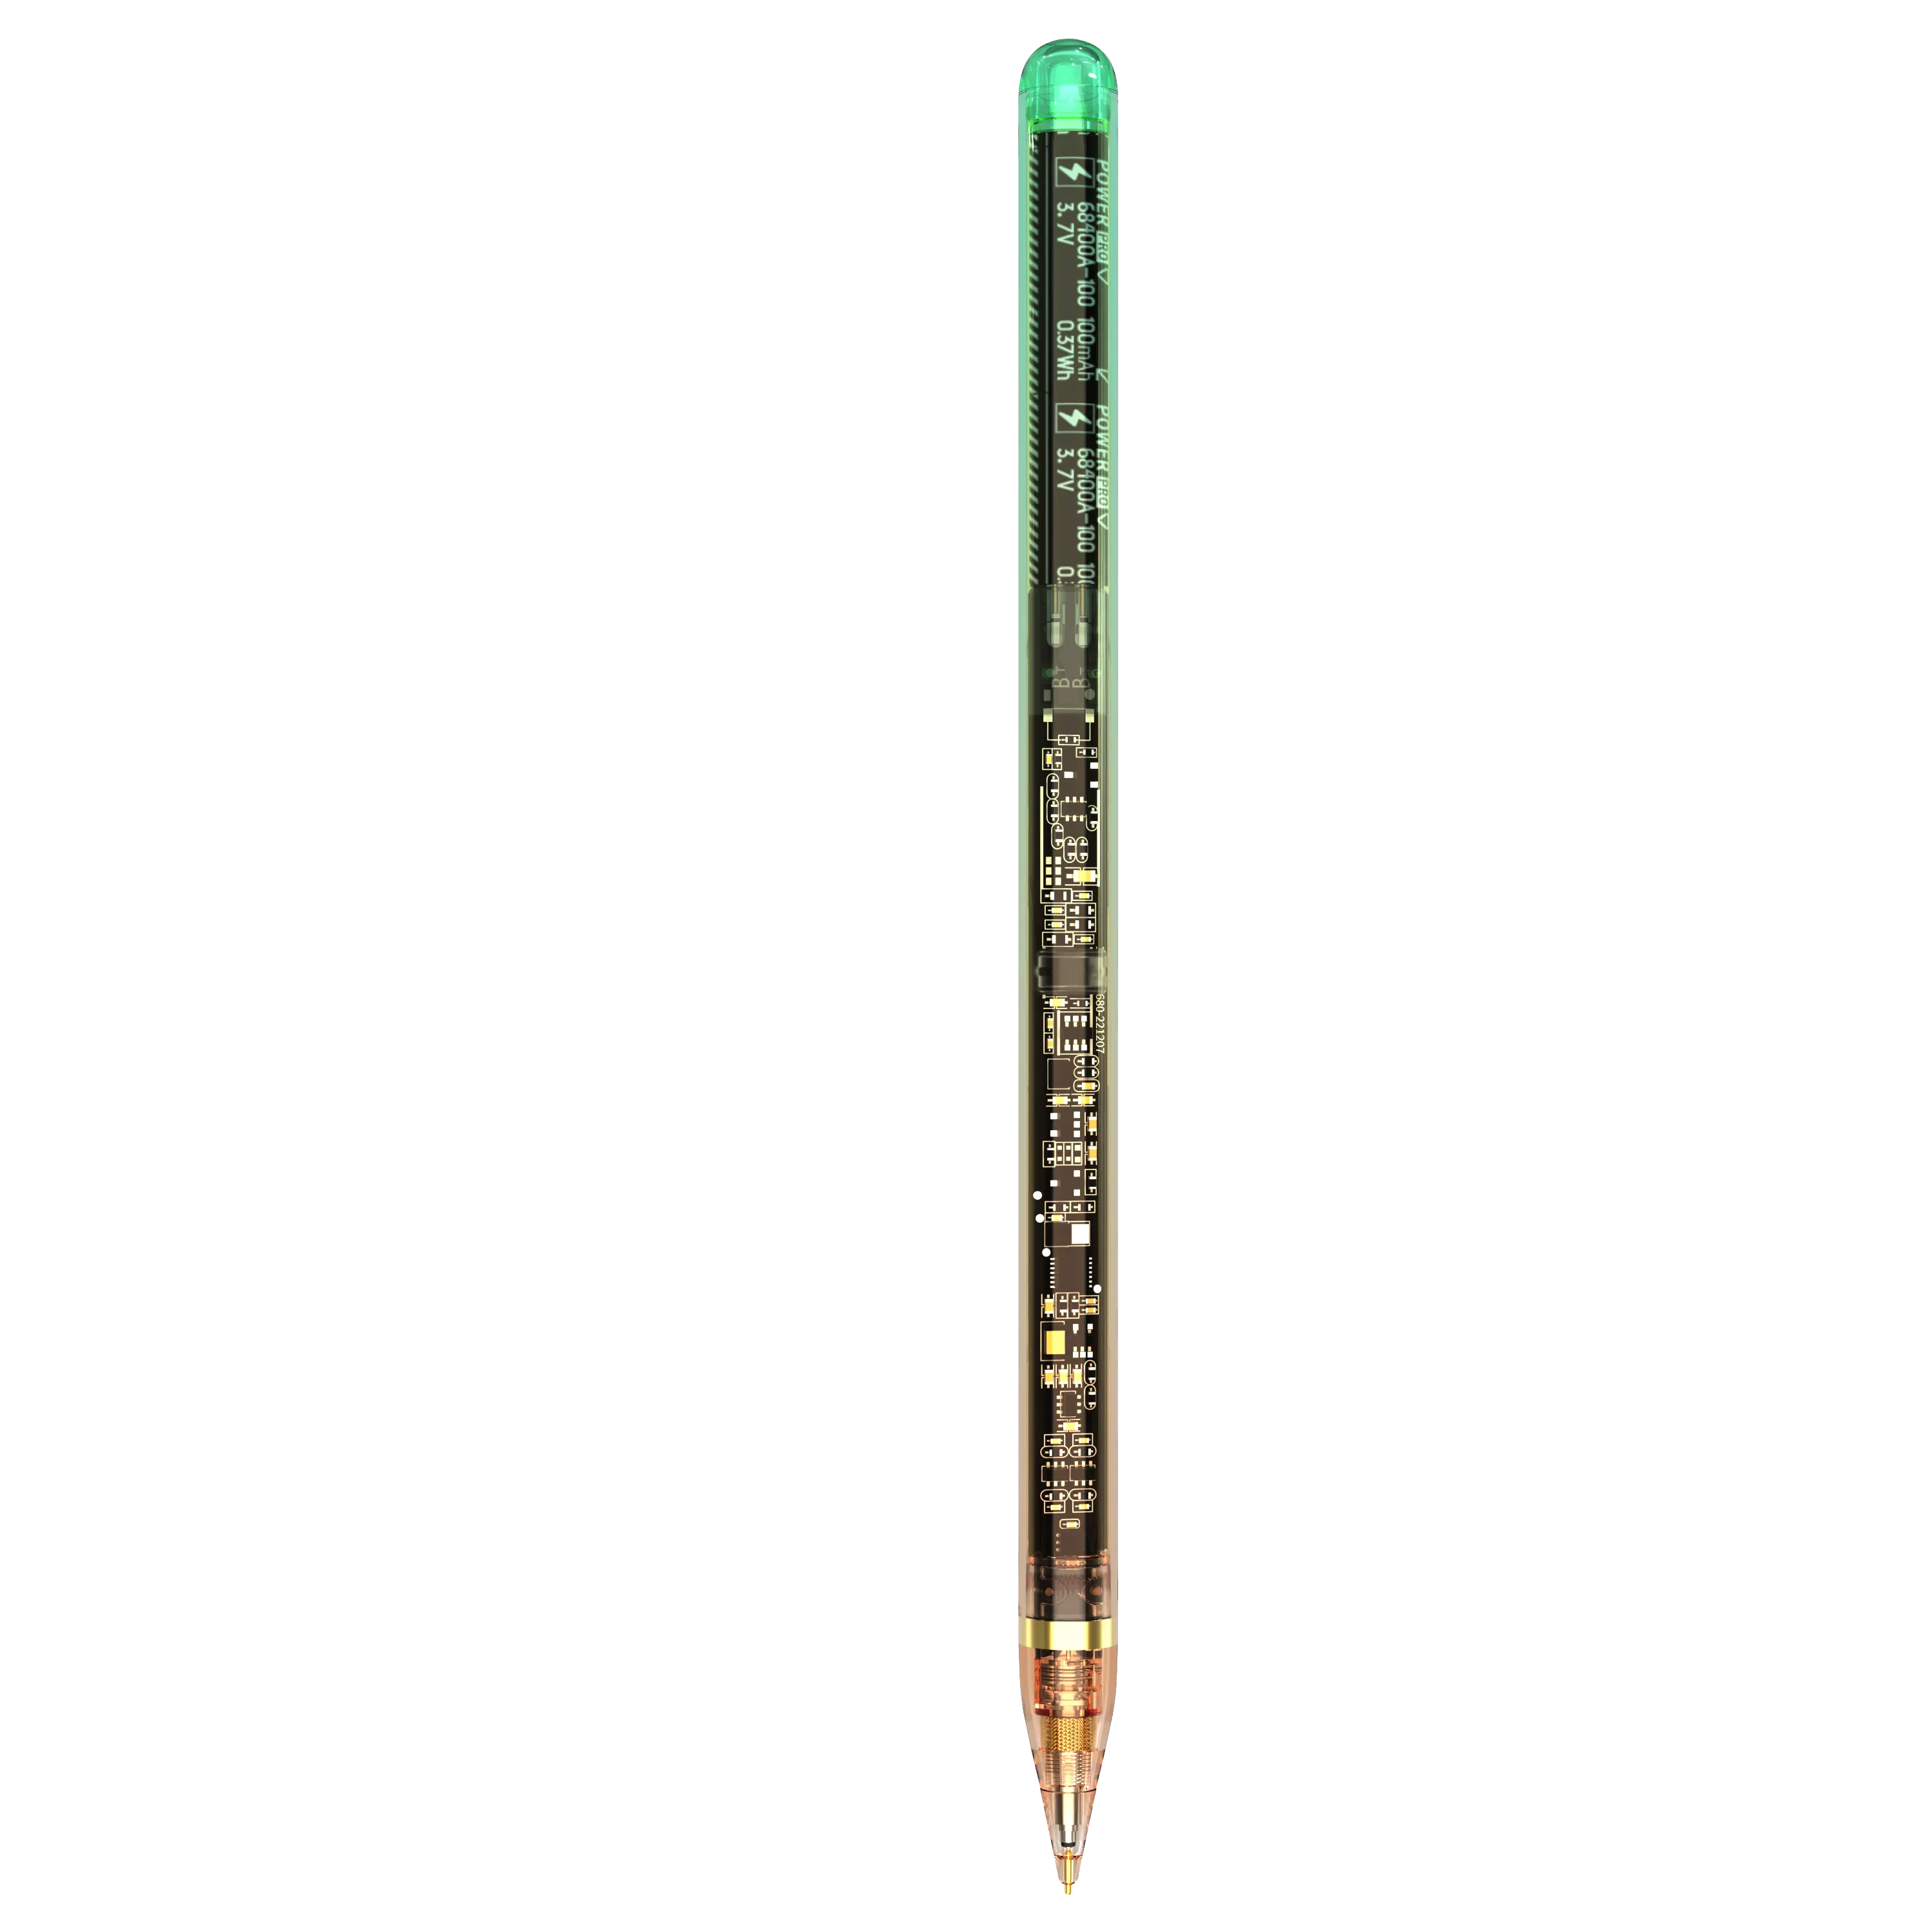 Pensil Apple pengisi daya magnetik transparan aktif adalah stylus gambar untuk iPad